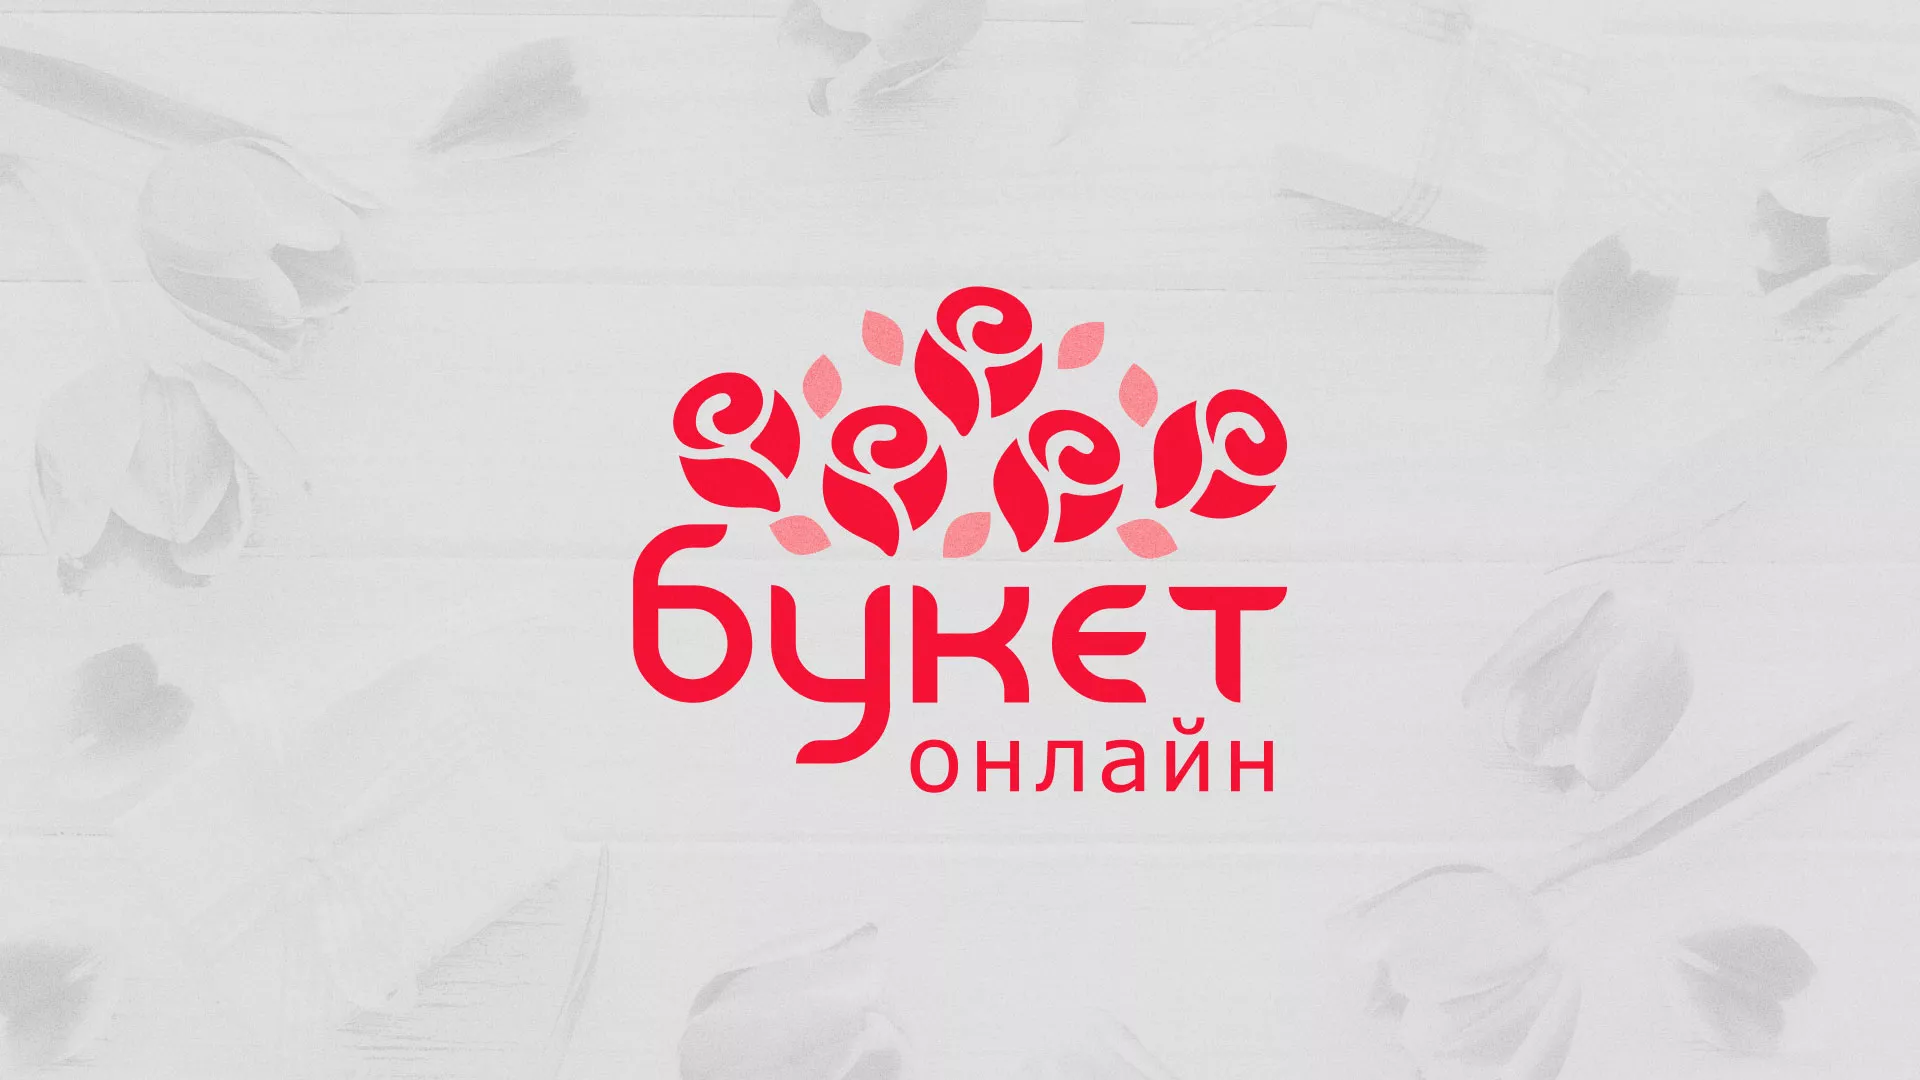 Создание интернет-магазина «Букет-онлайн» по цветам в Абинске